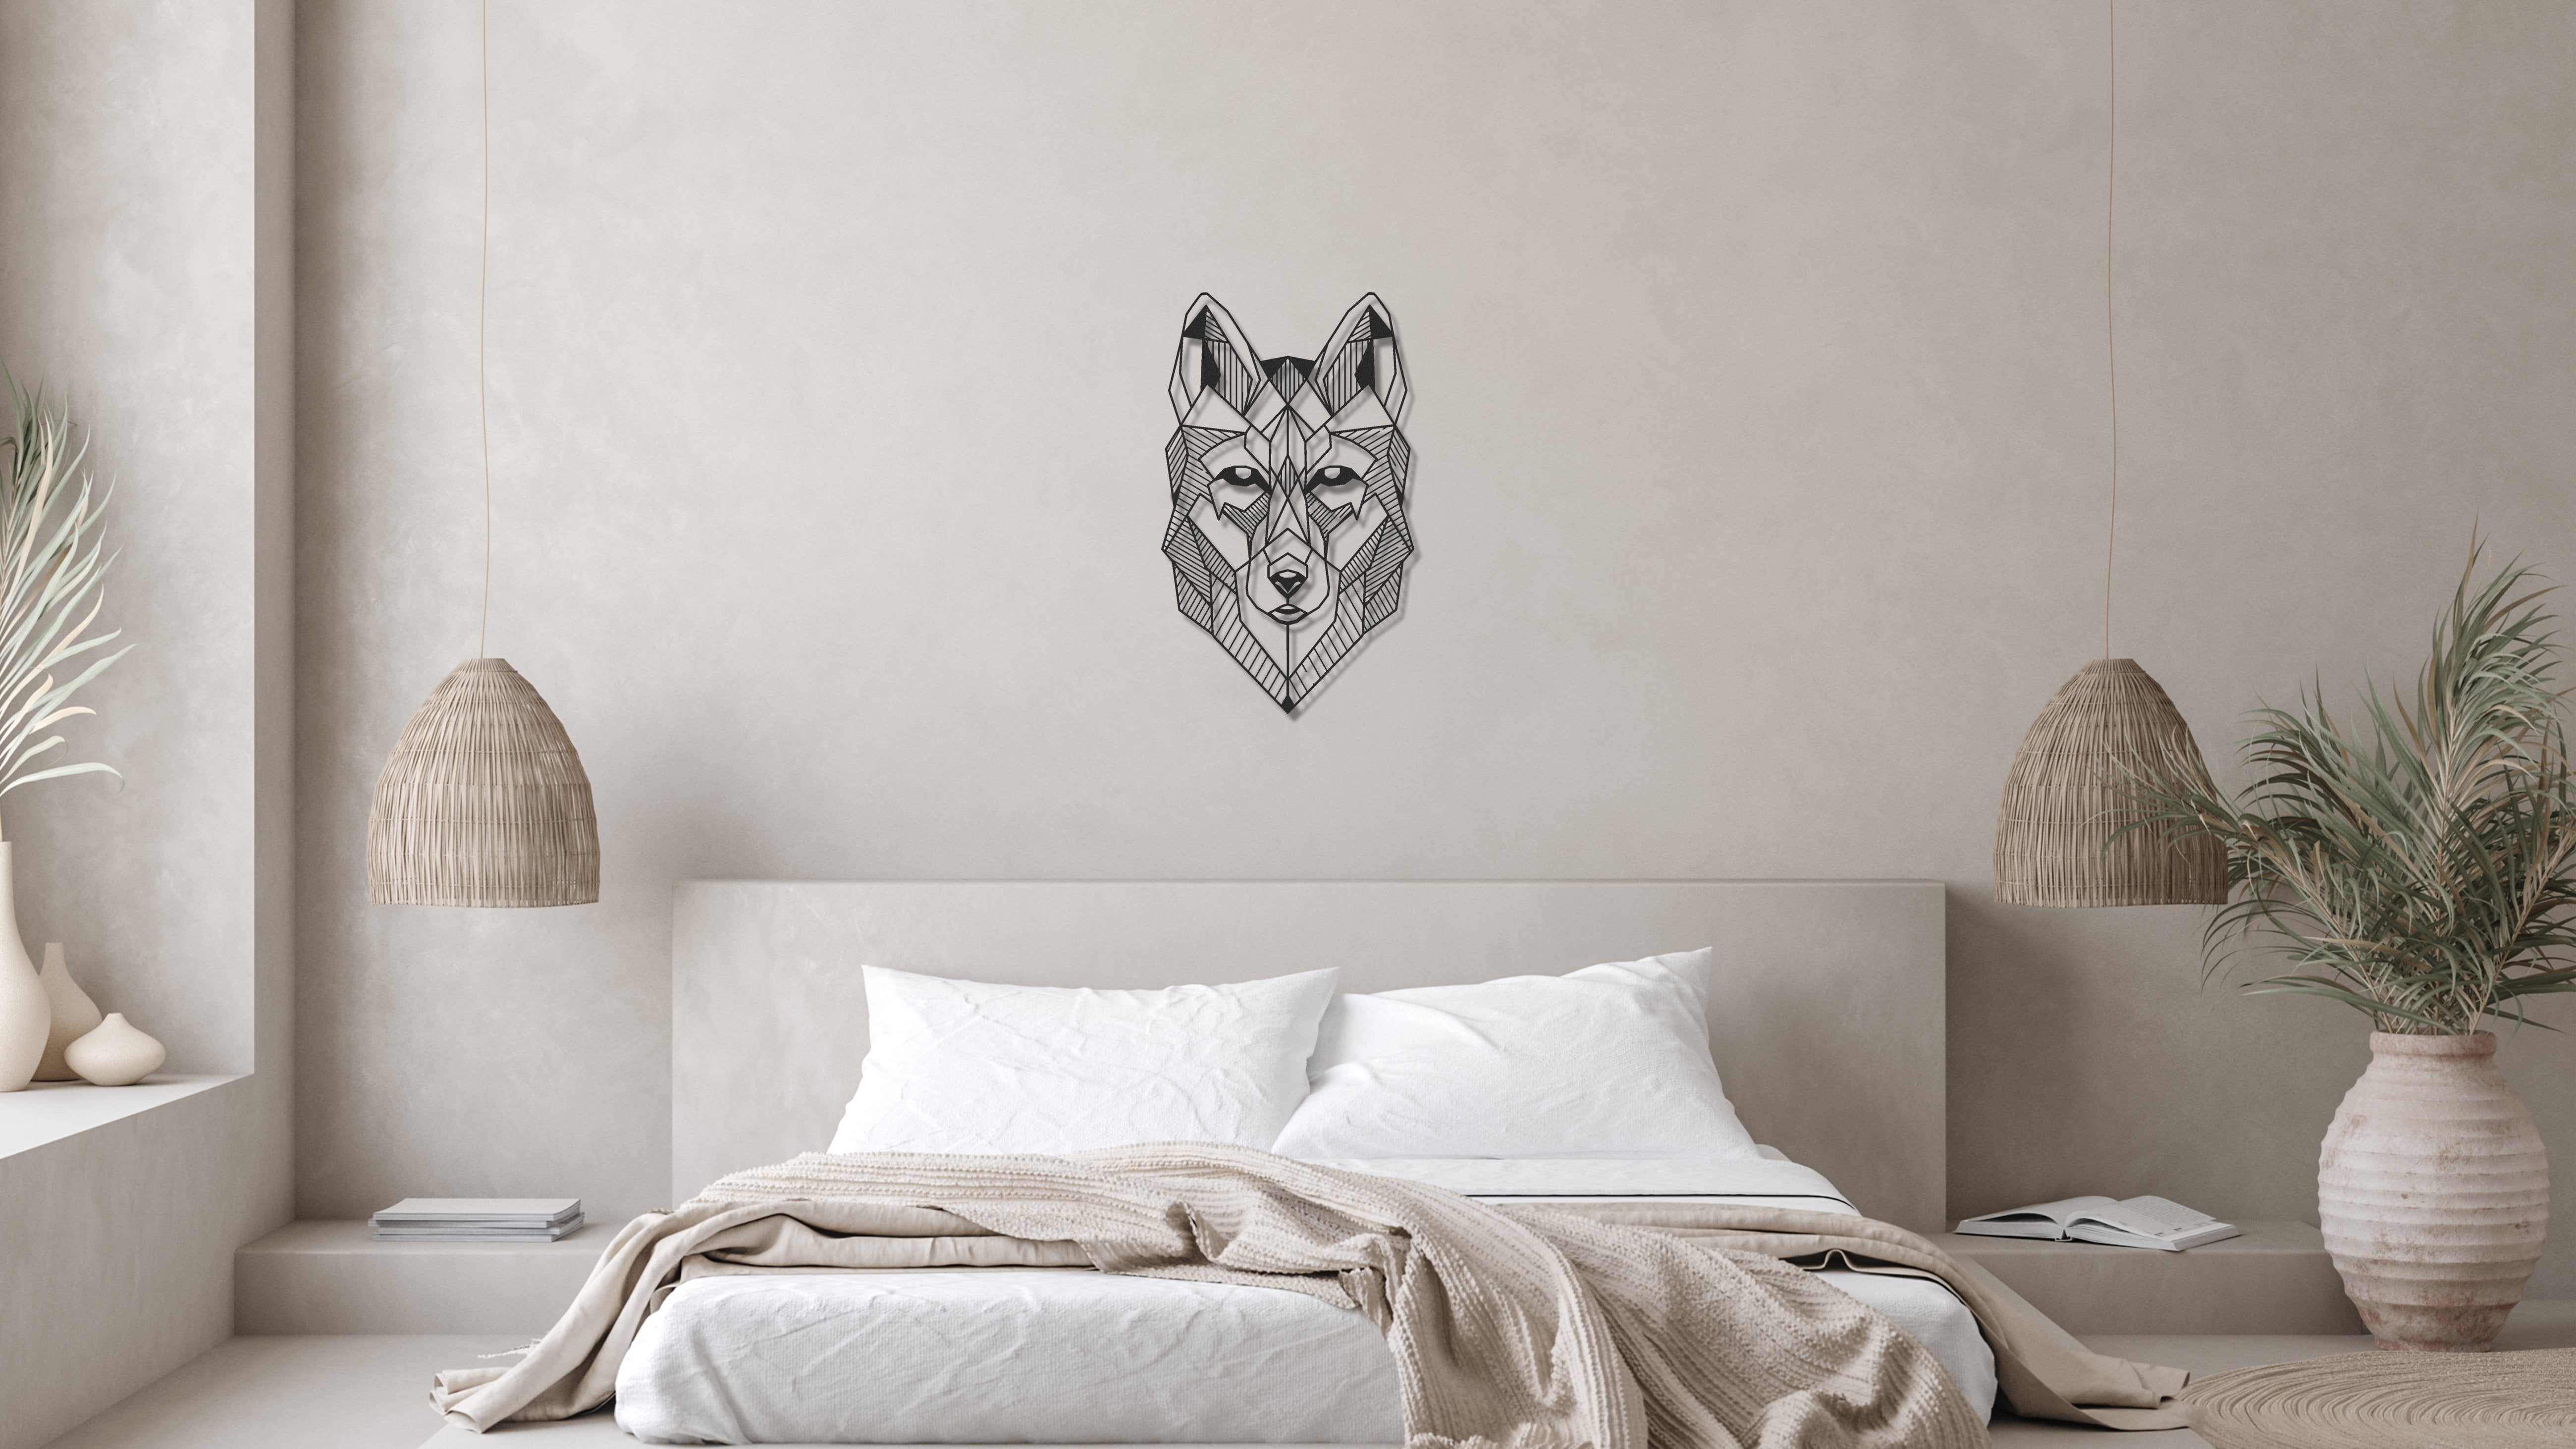 ・"Wolf Head"・Premium Metal Wall Art - Limited Edition